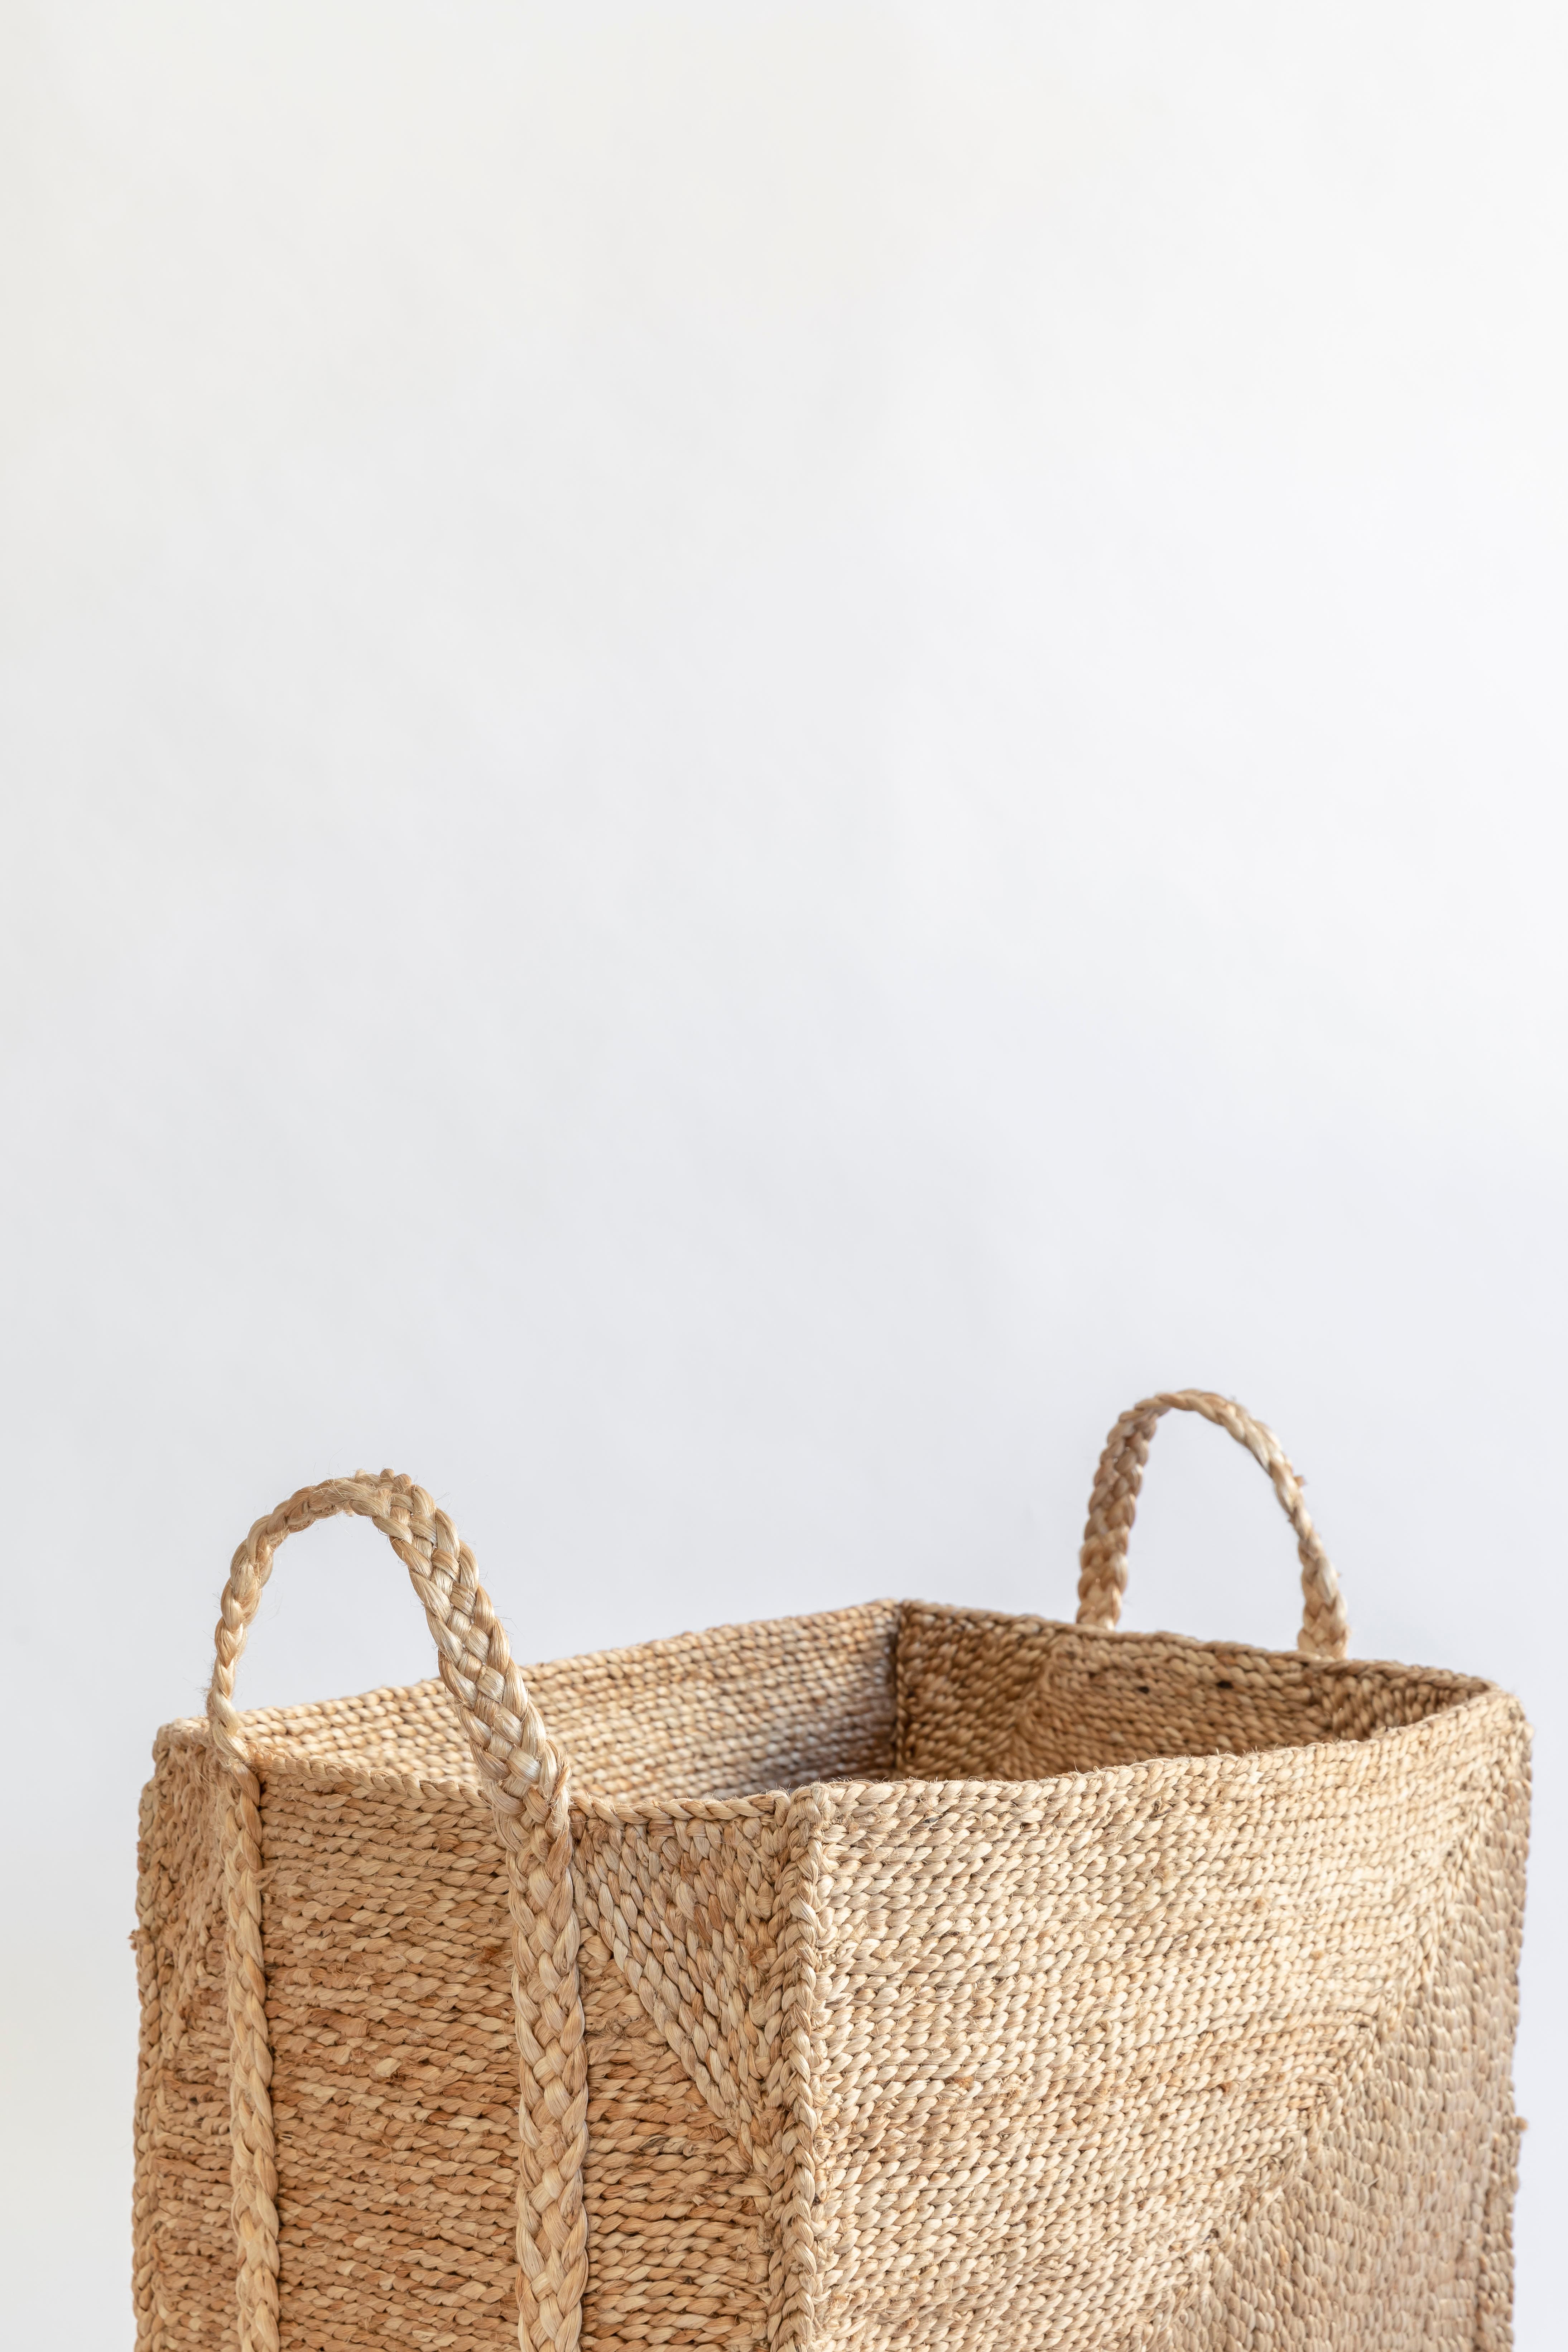 J'Jute Handmade Jute Basket Medium, Natural For Sale 2